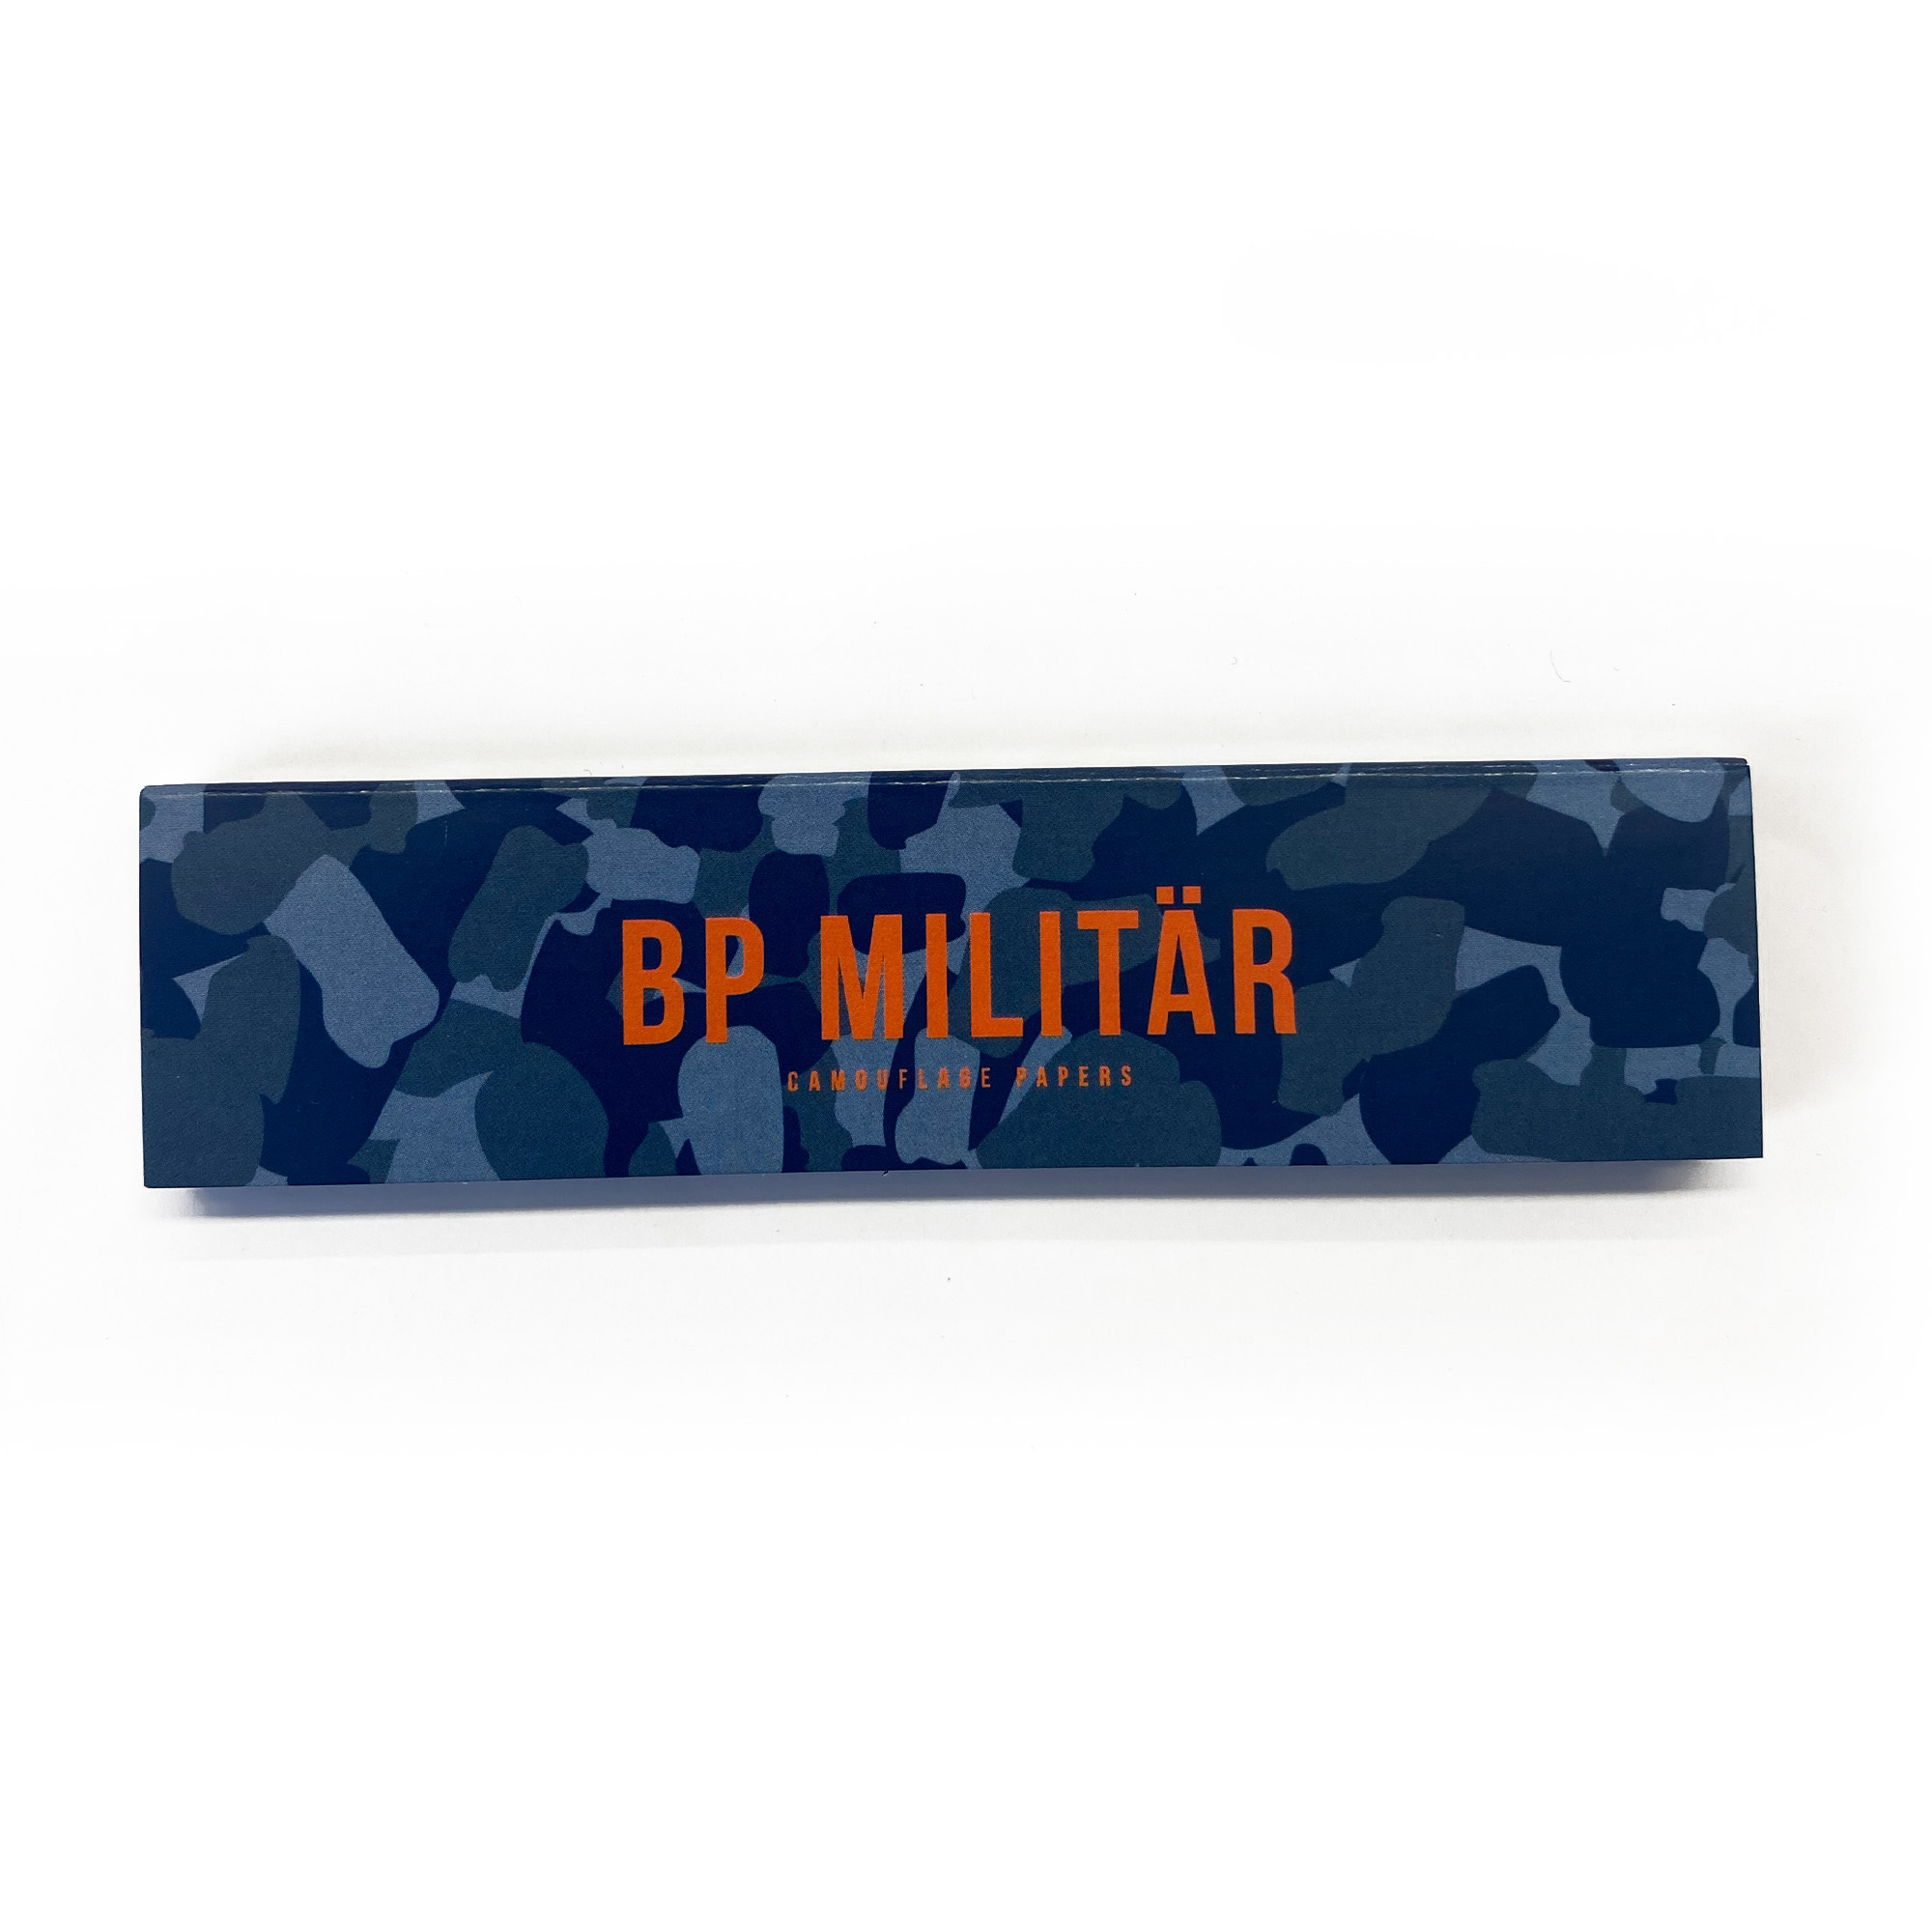 BP Militär [Papers]